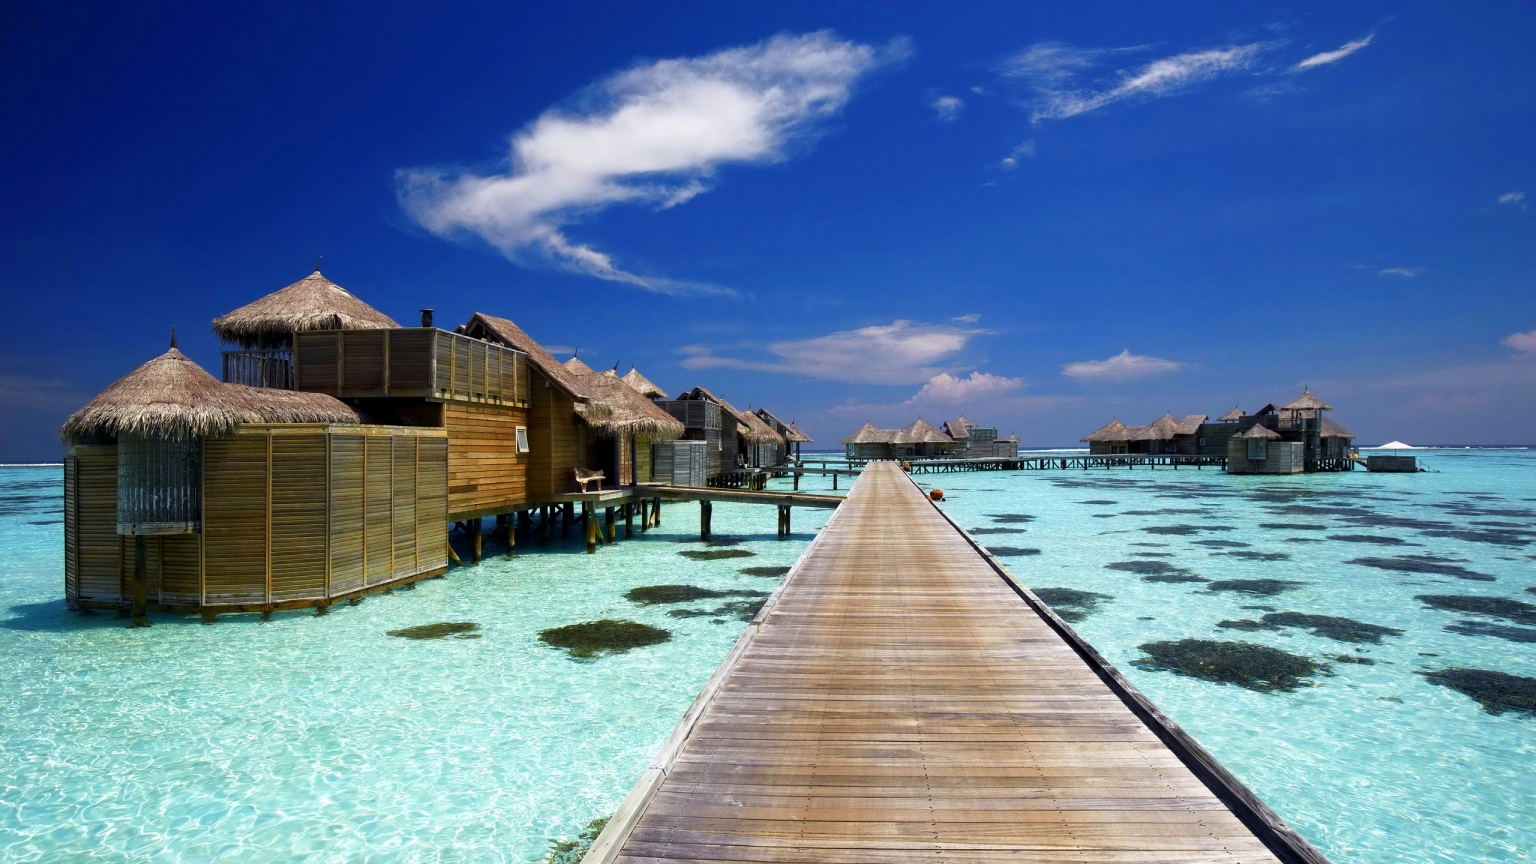 Luxury Resort in Maldives for 1536 x 864 HDTV resolution